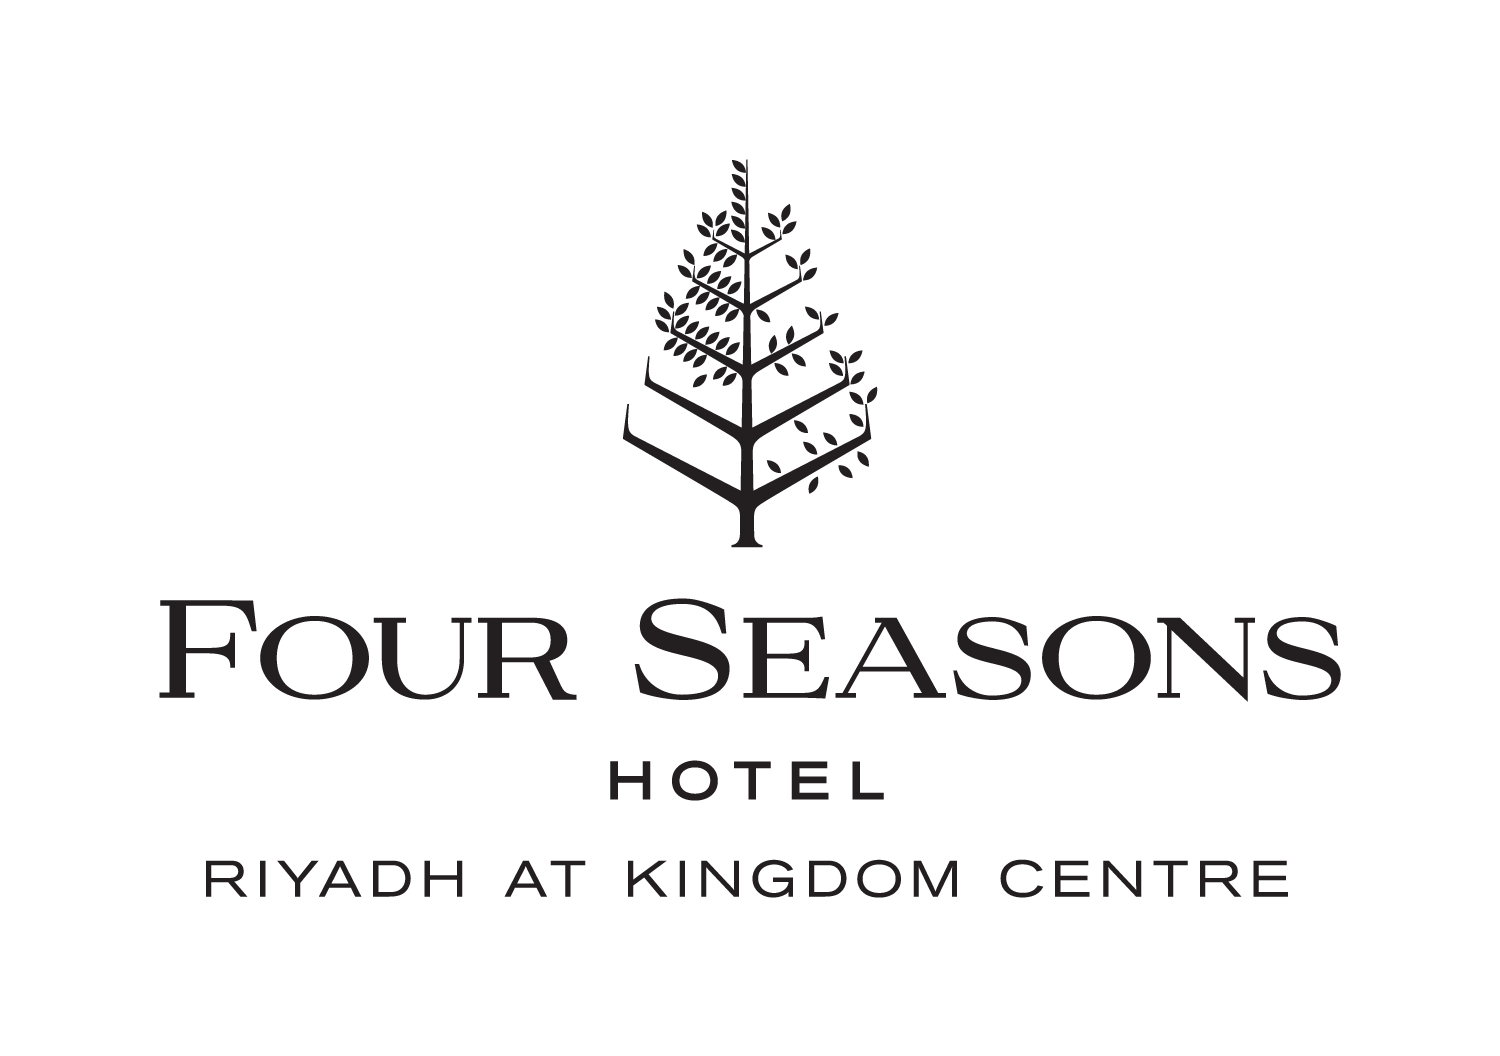 The Four Seasons Riyadh logo